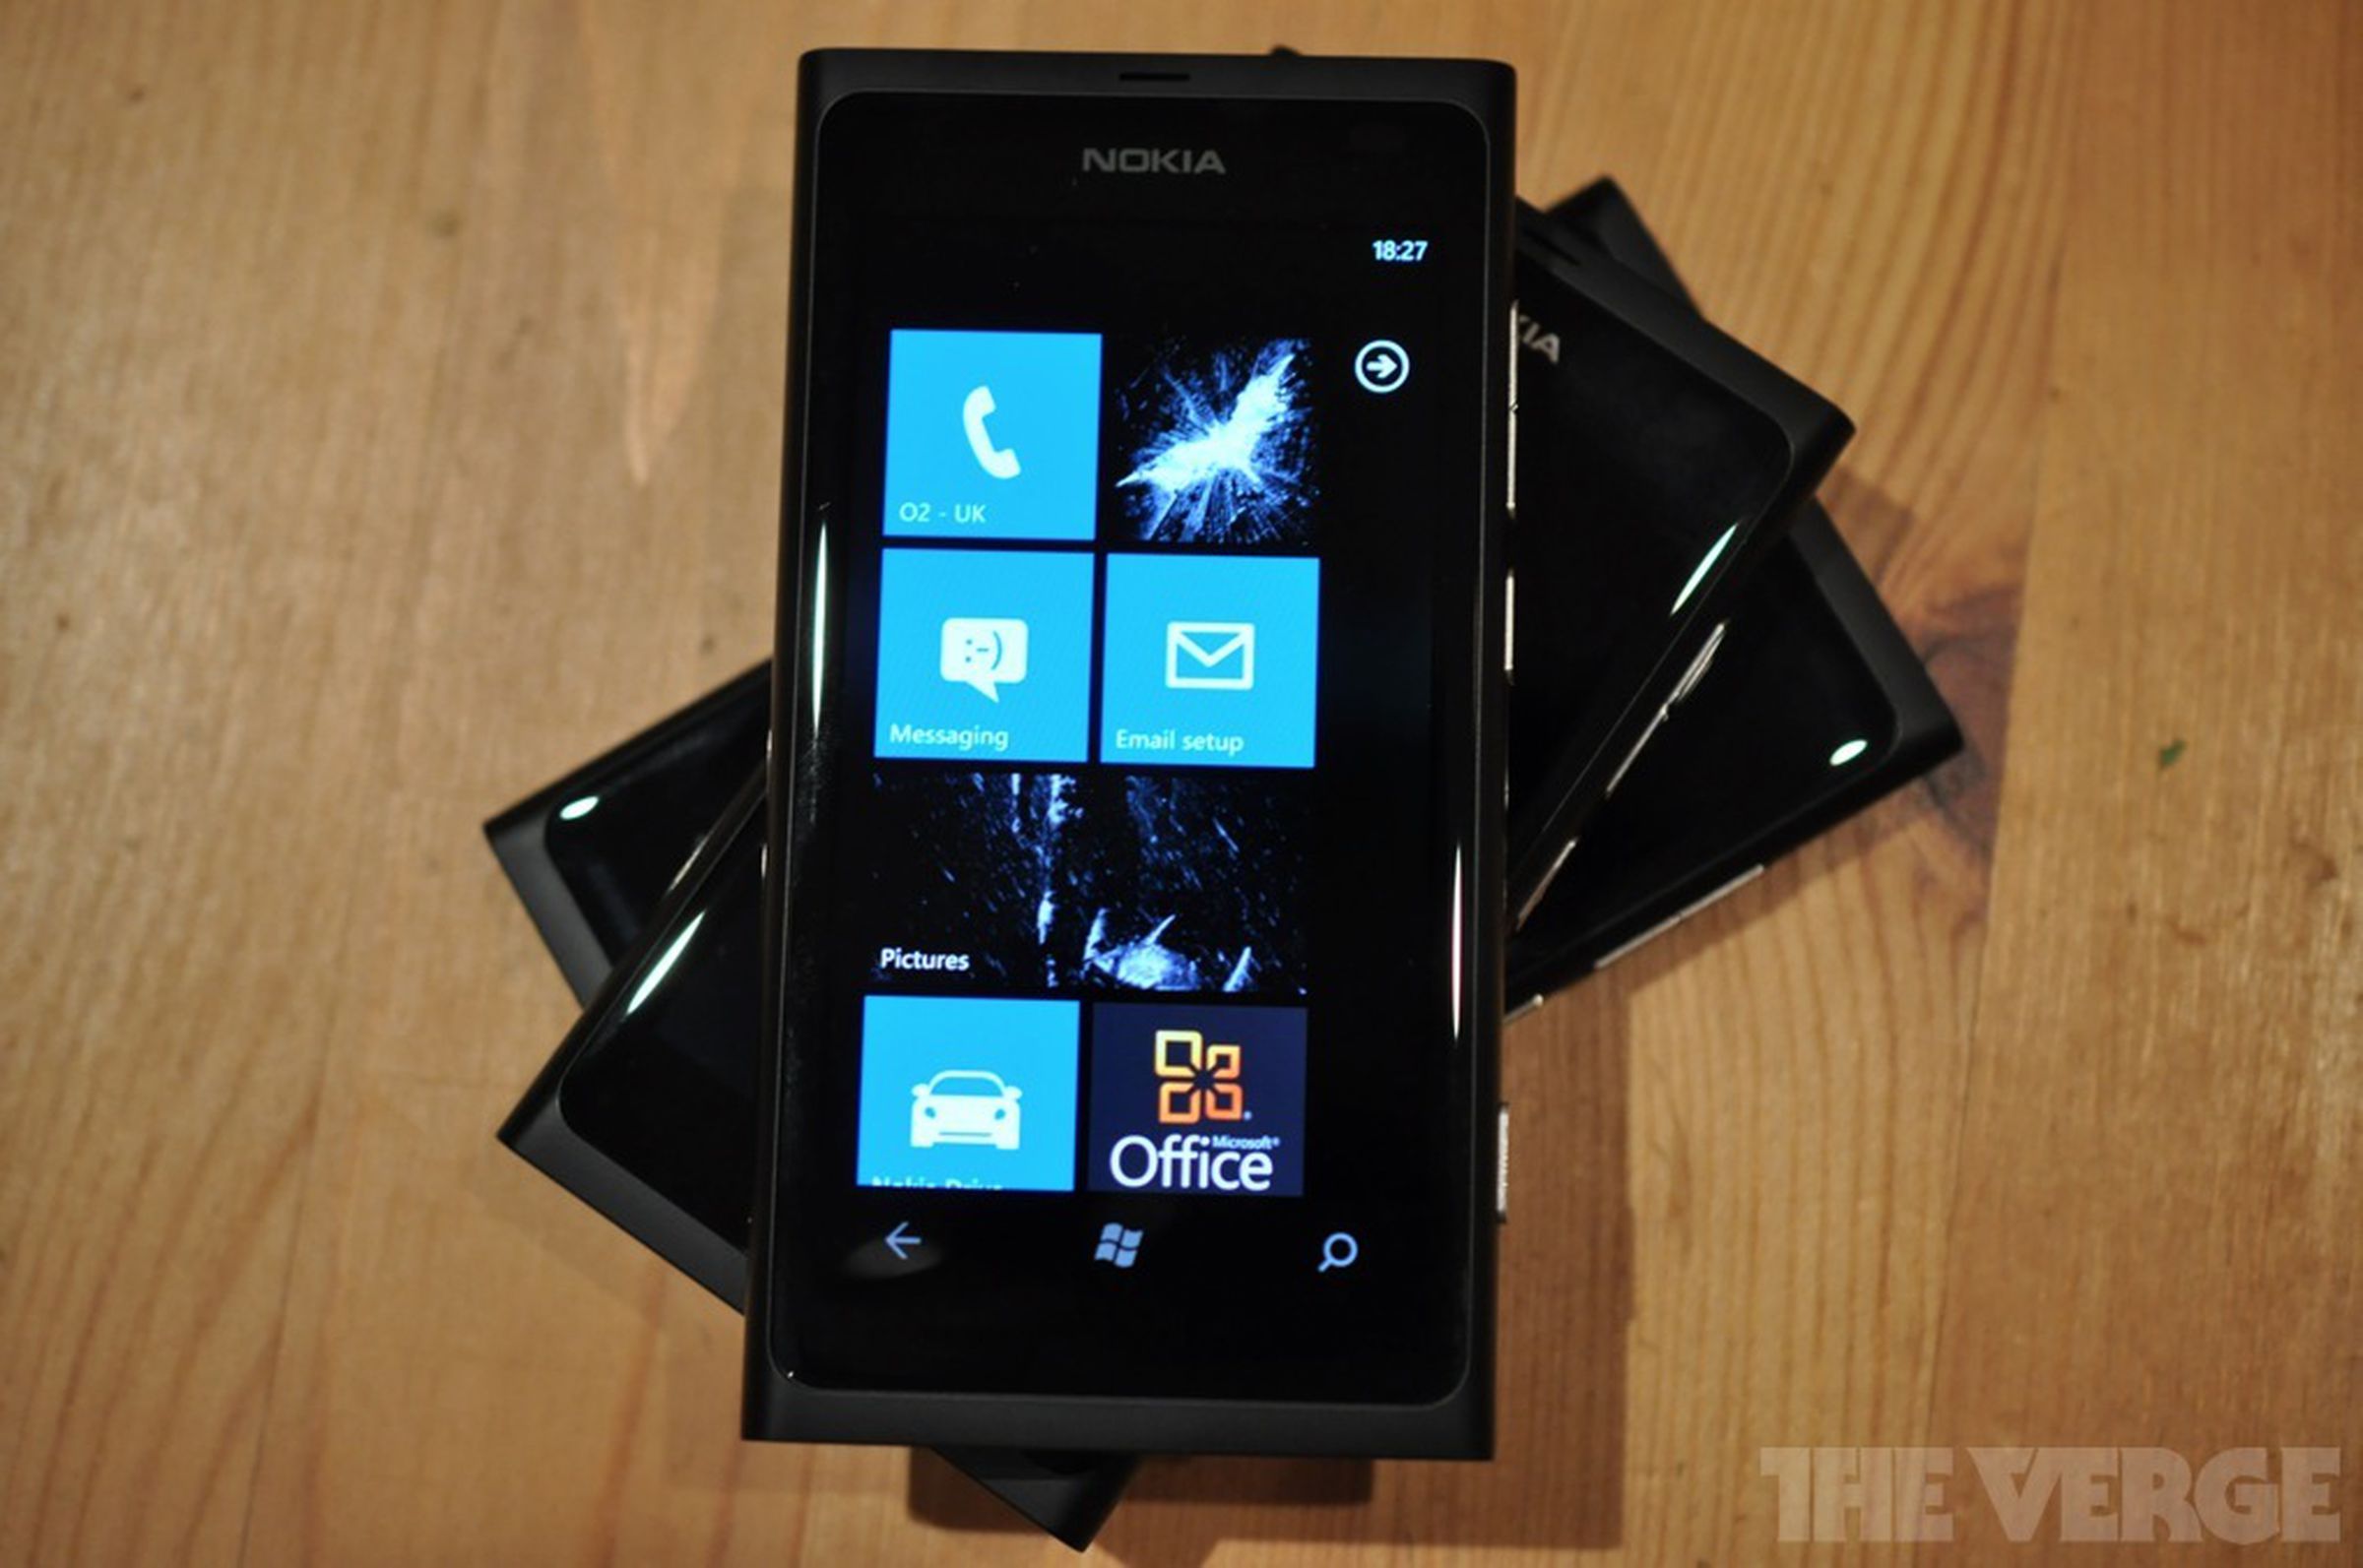 Nokia Lumia 800 Dark Knight Rises hands-on gallery